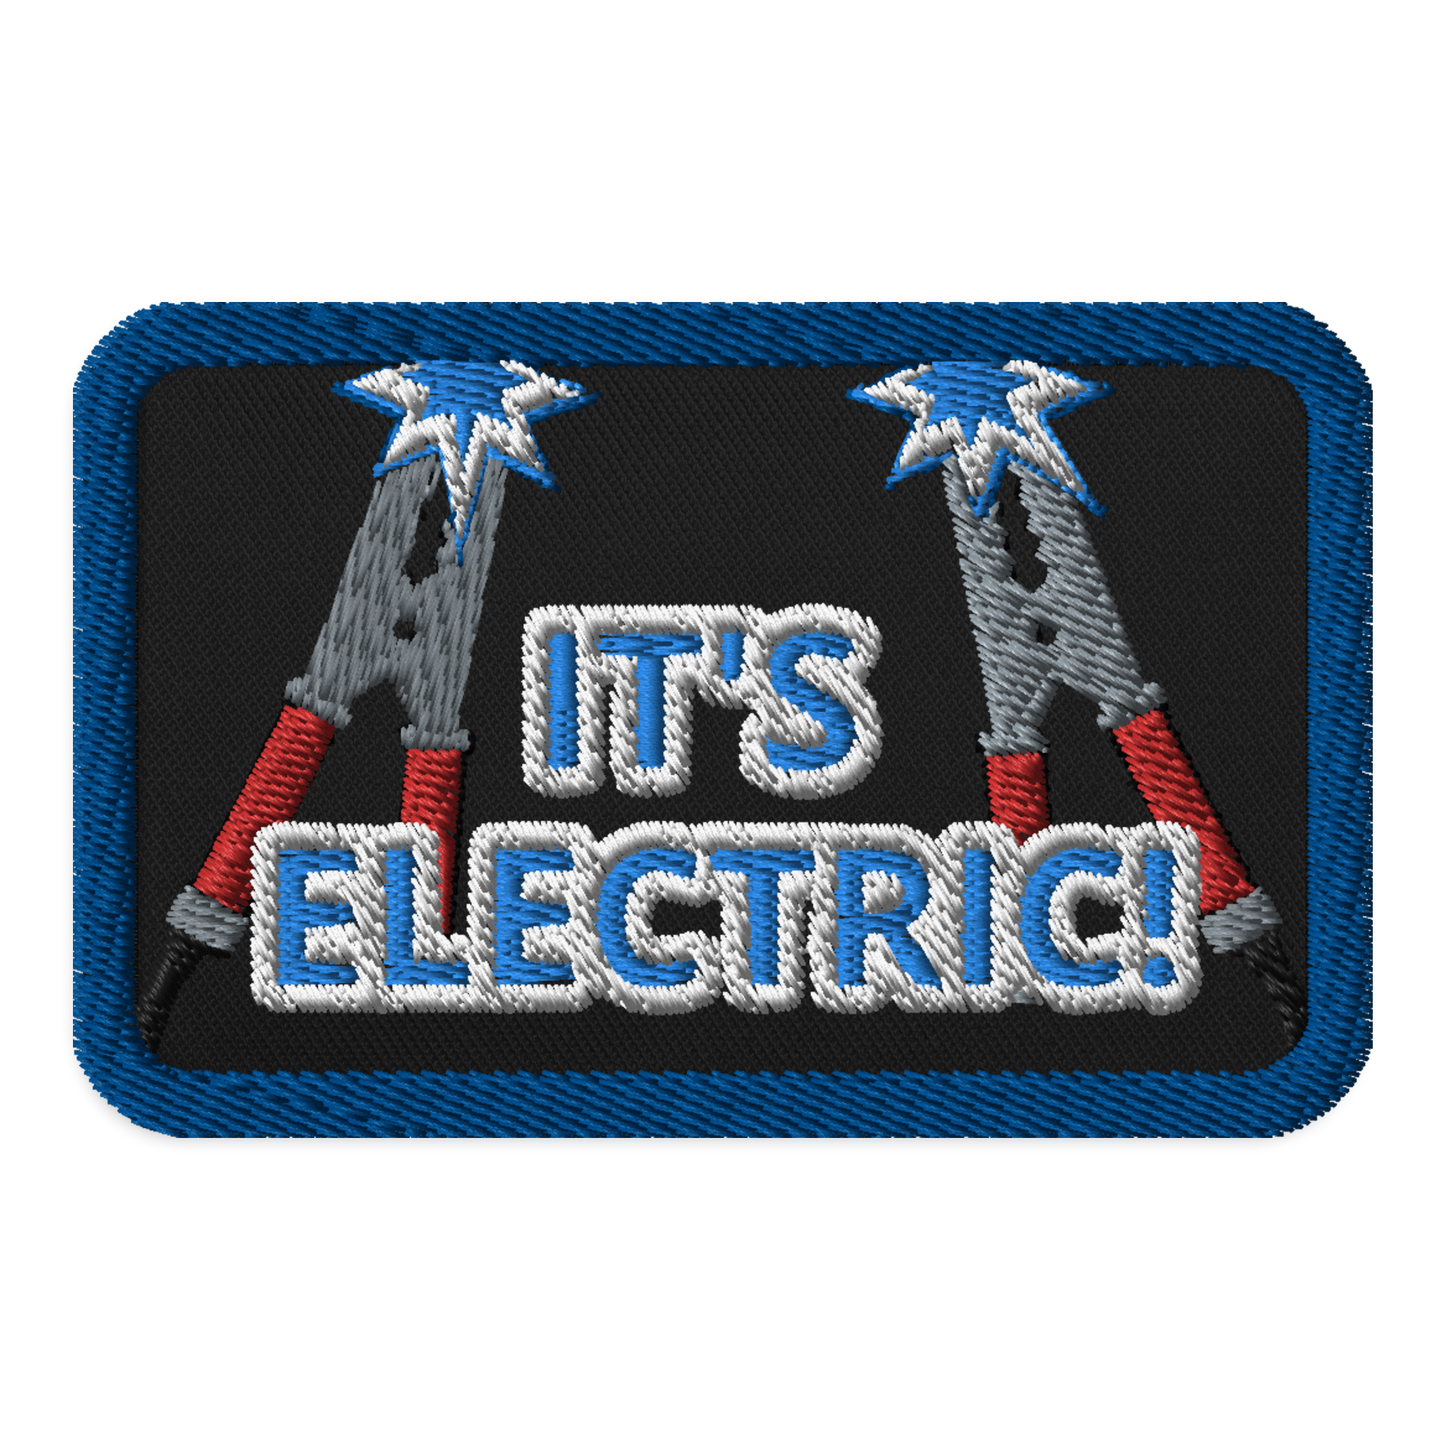 Meme Patches: Electric Slide